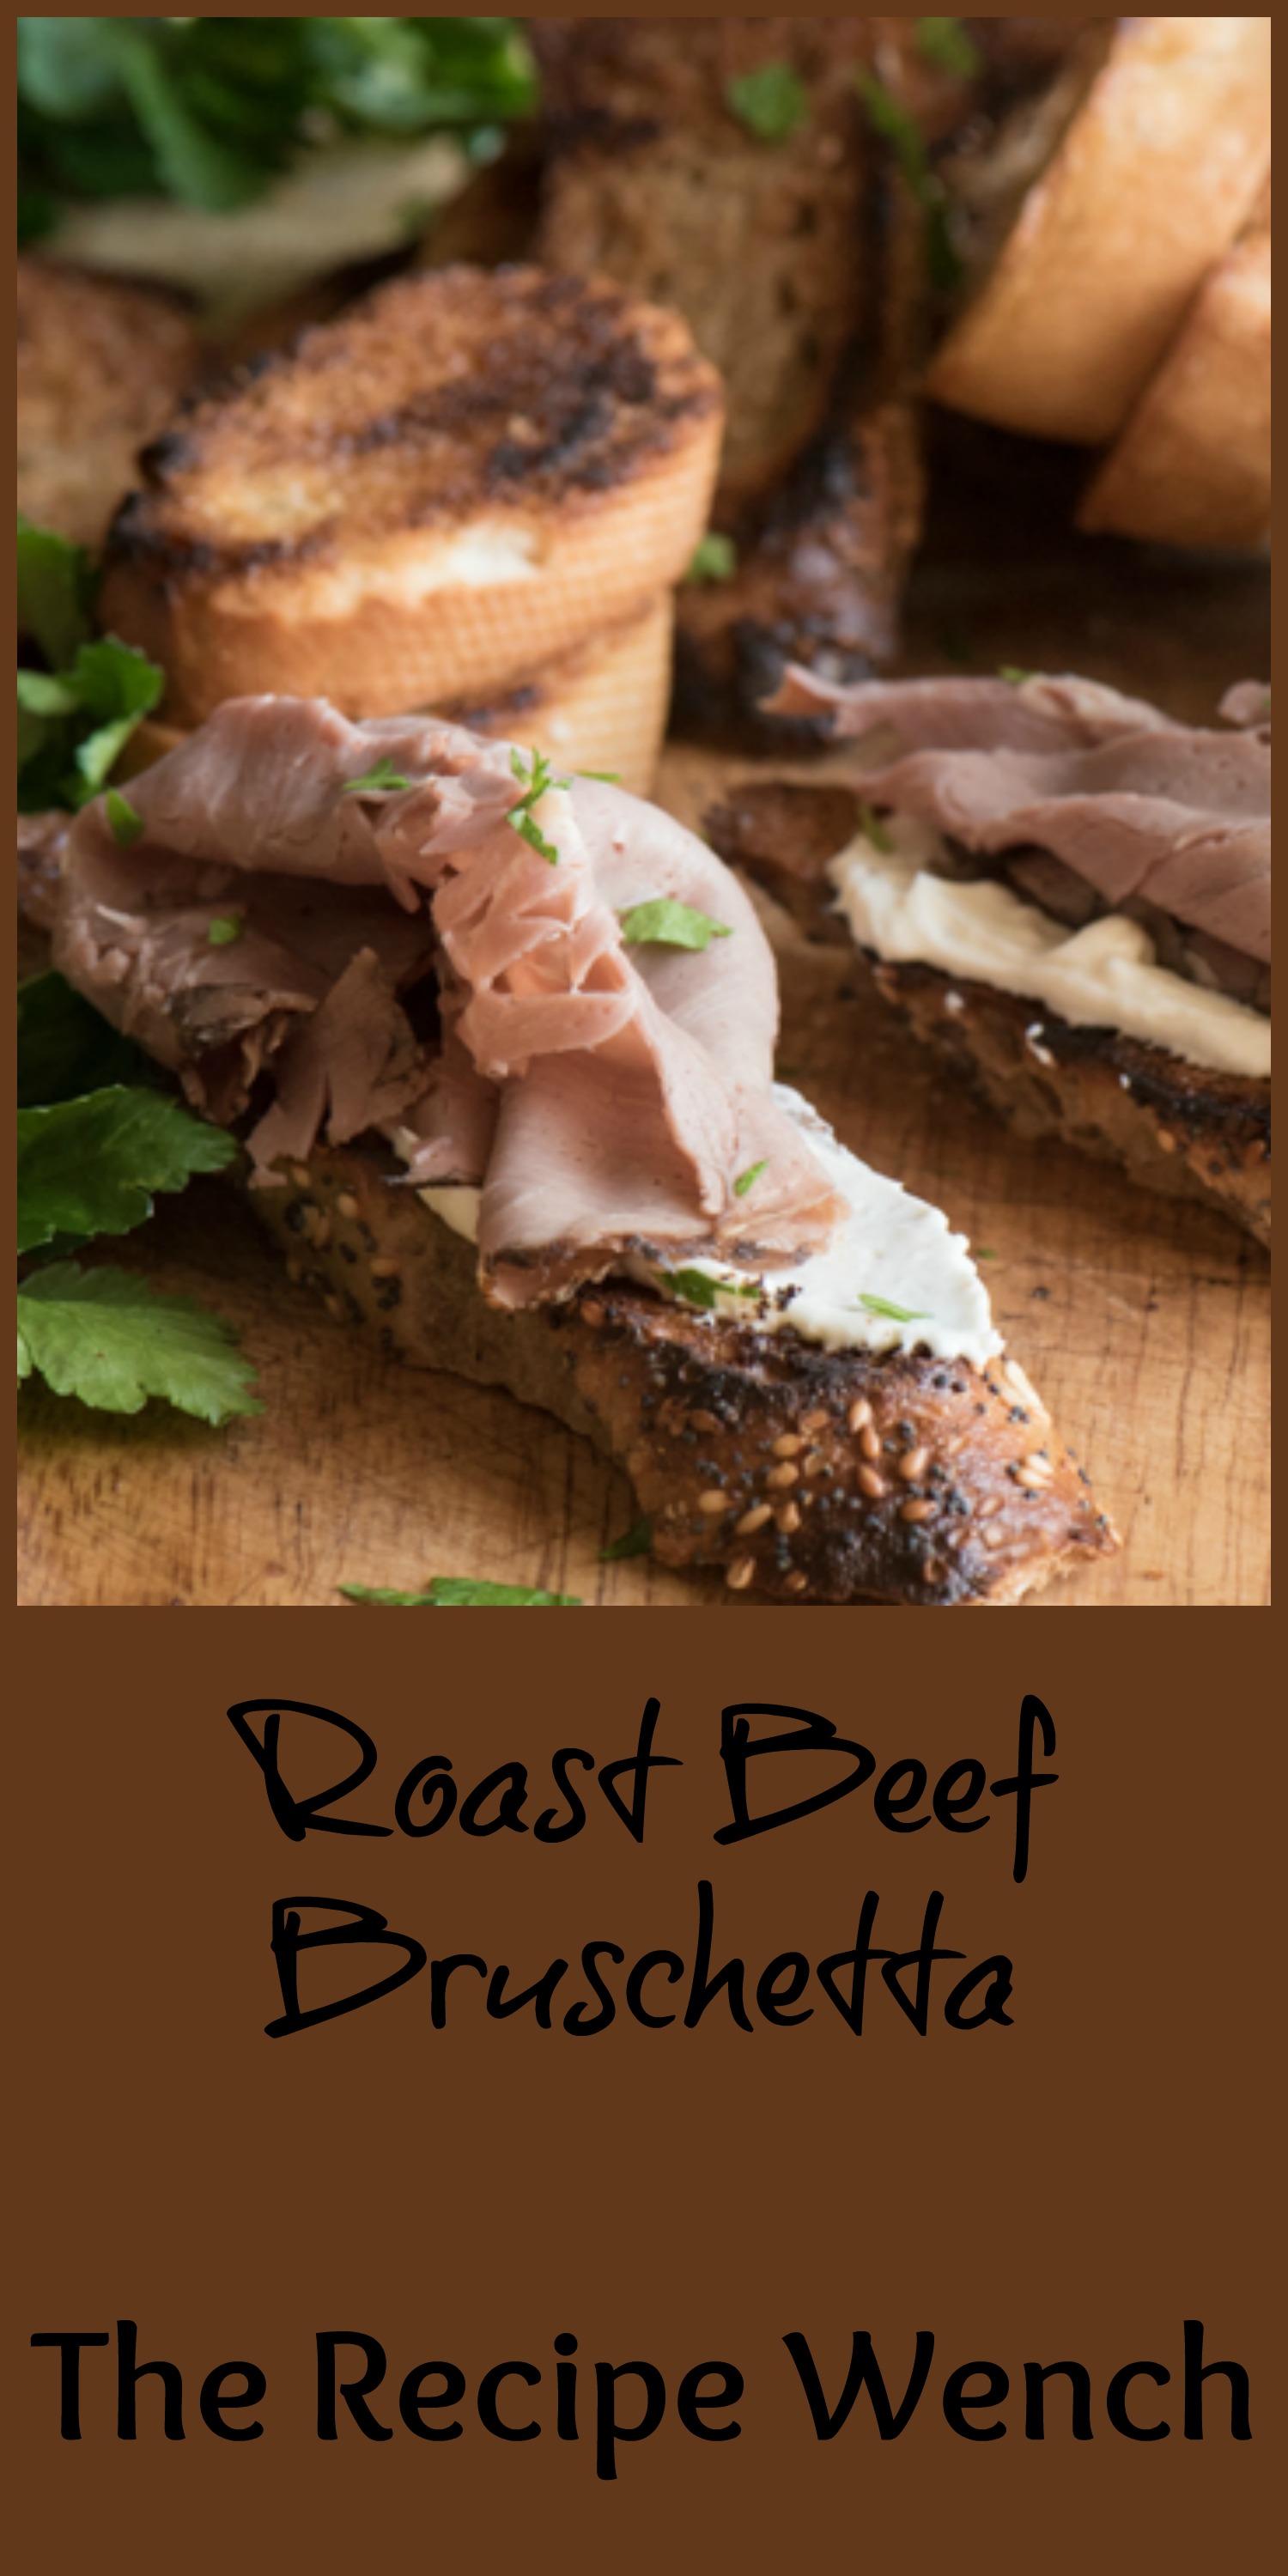 Roast Beef Bruschetta - rub a little garlic on toast, maybe add some horseradish, cream cheese and BOOM! | The Recipe Wench